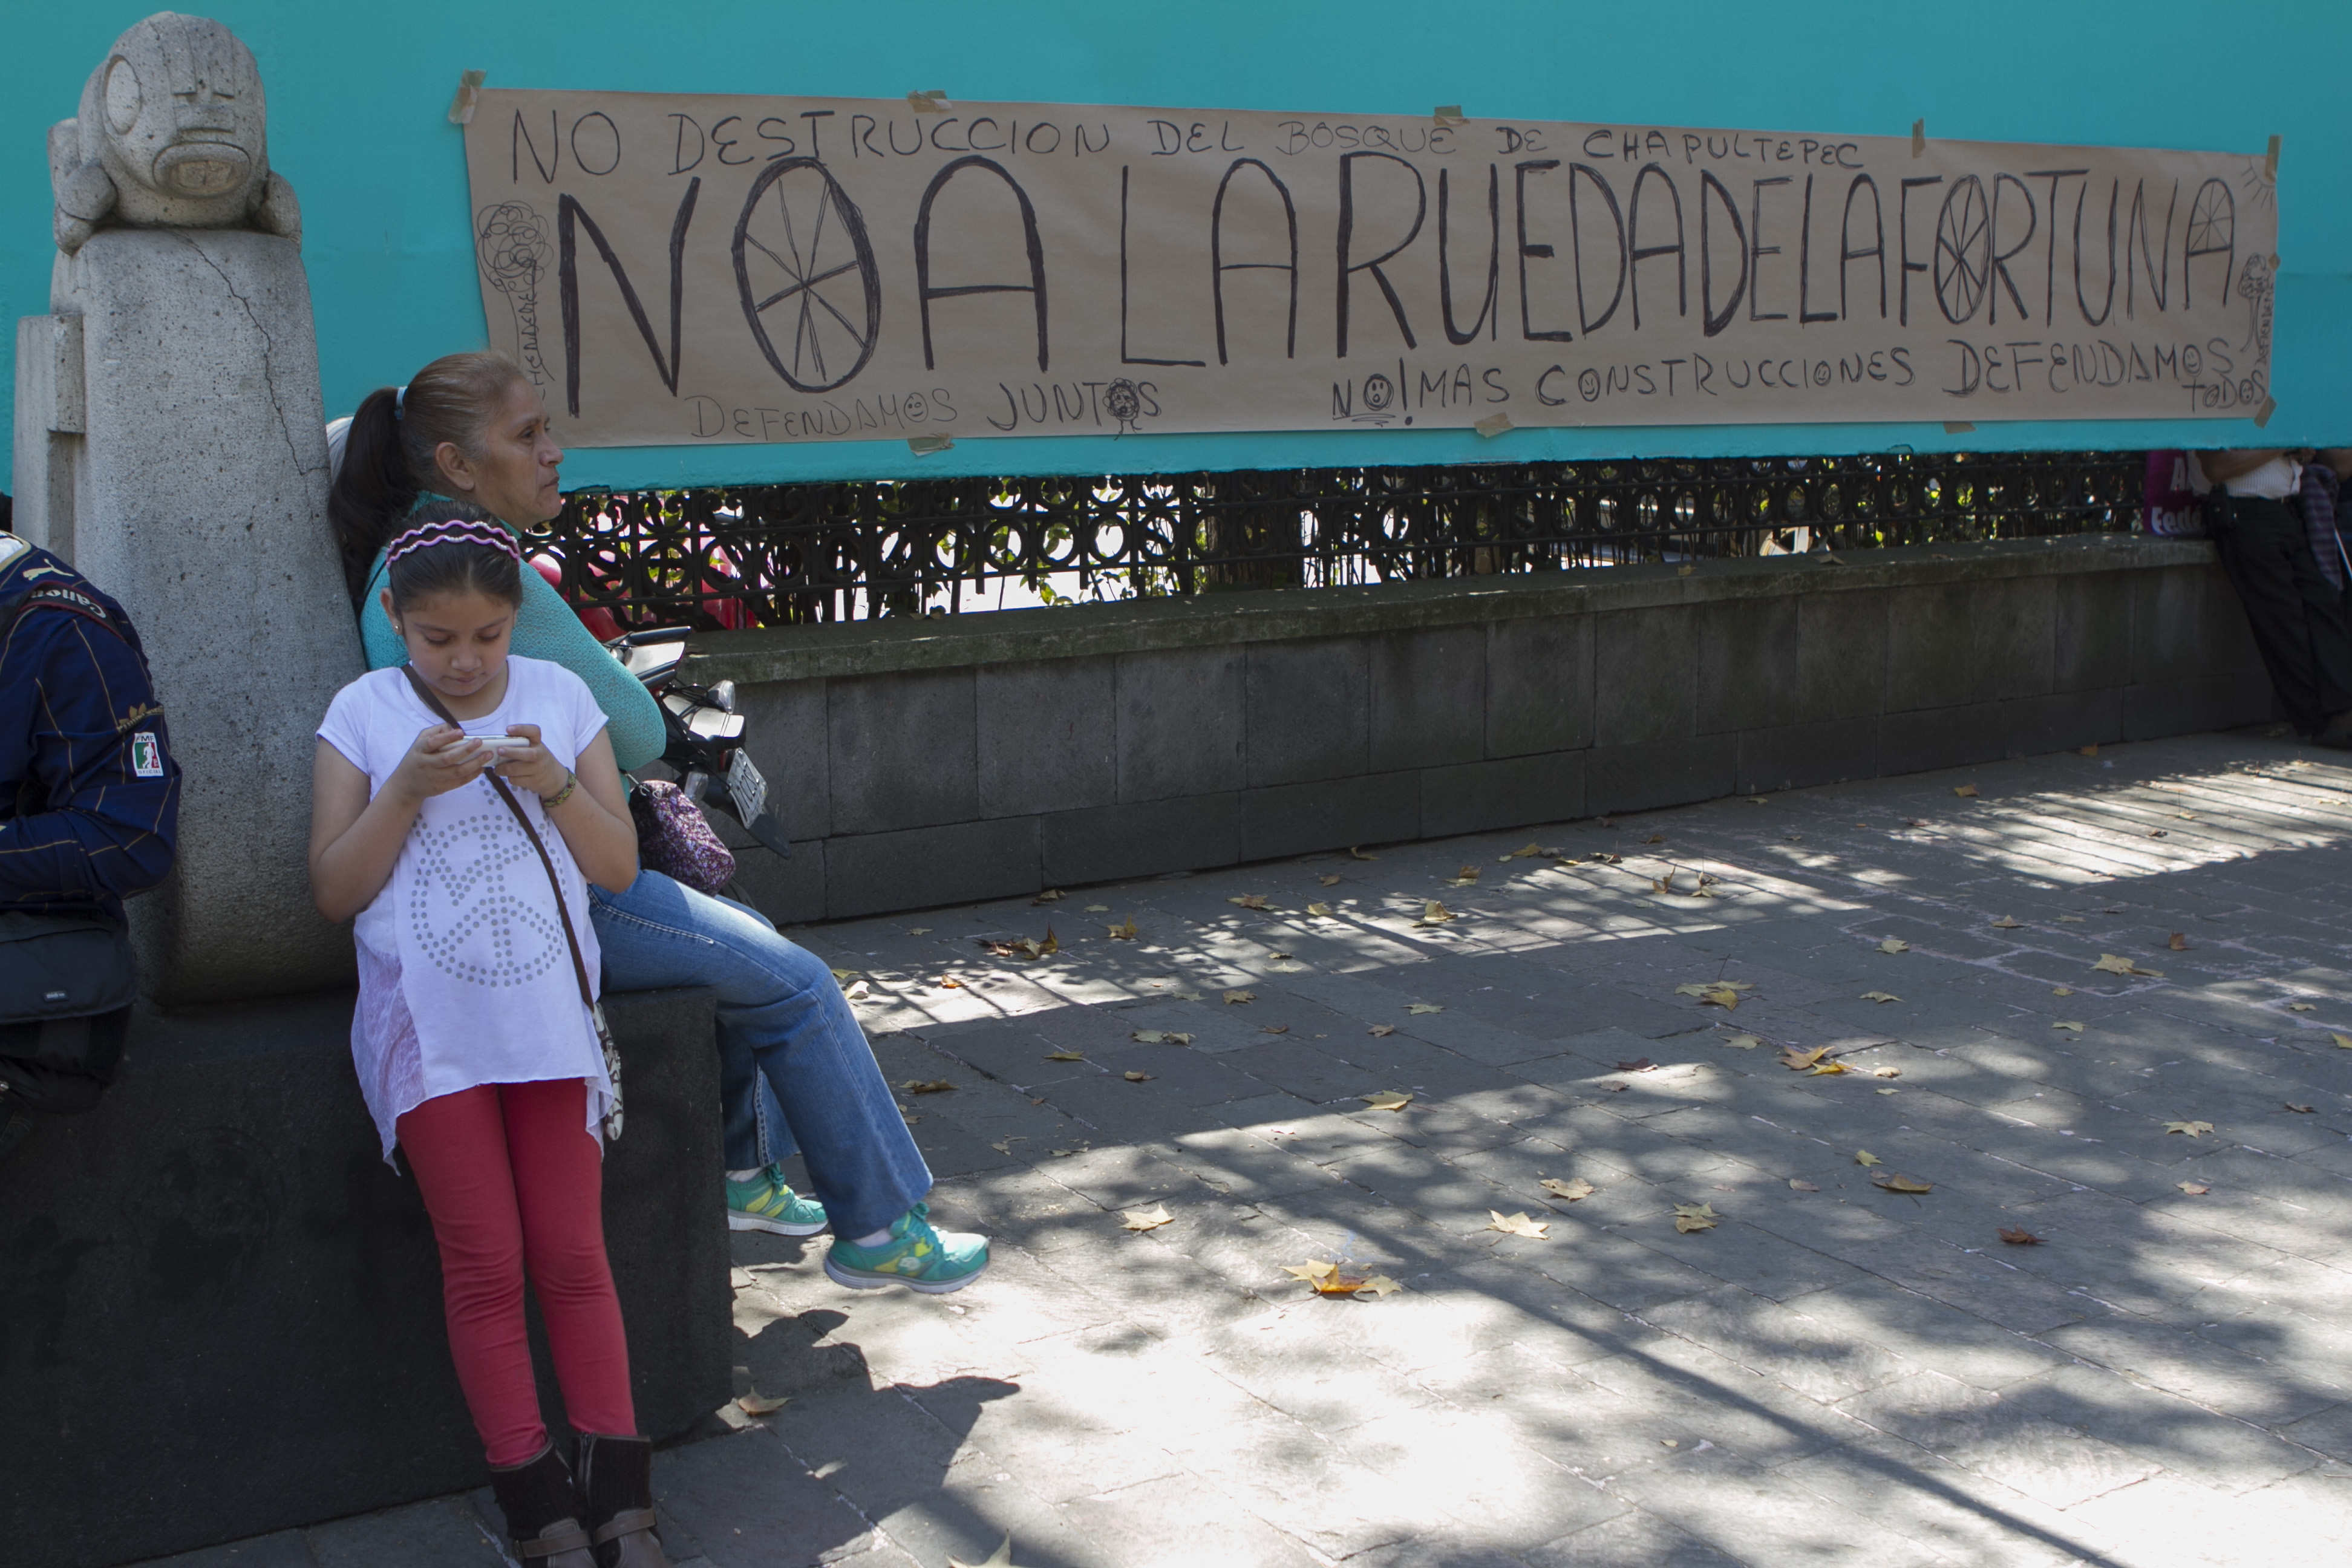 Protestan contra rueda de la fortuna en Chapultepec